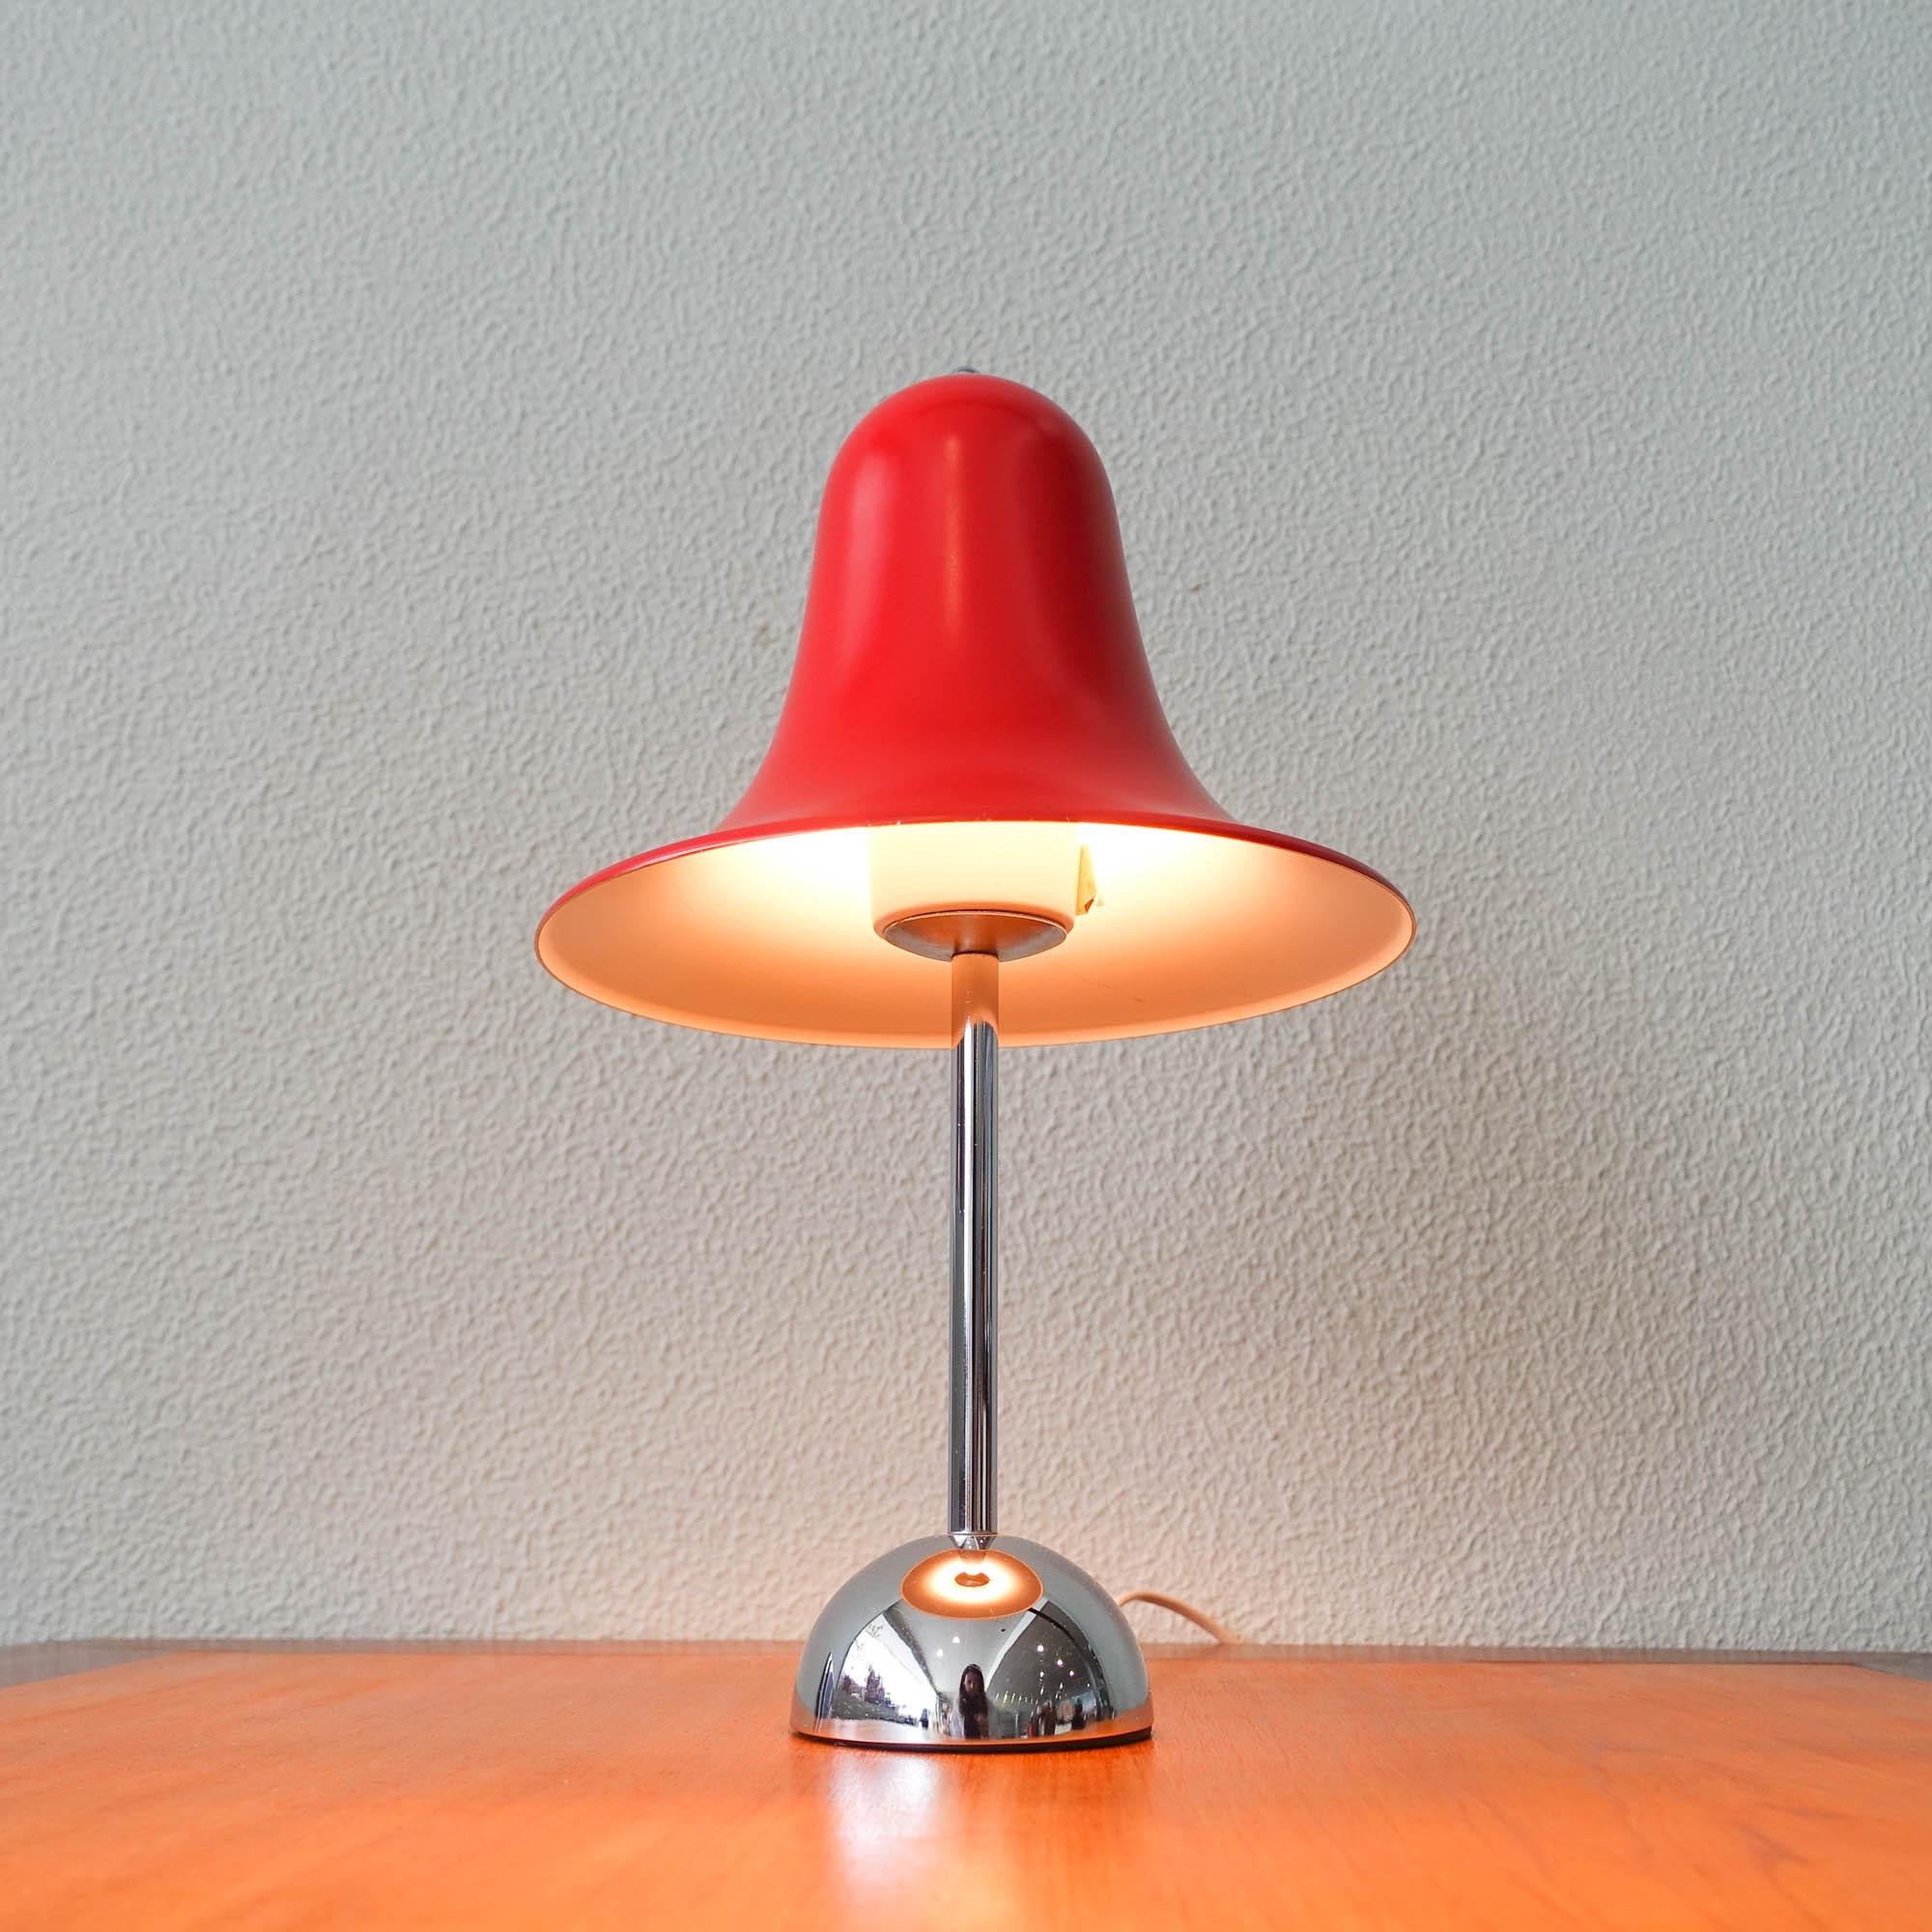 Mid-Century Modern Pantop D Table Lamp by Verner Panton for Elteva Danmark A/S